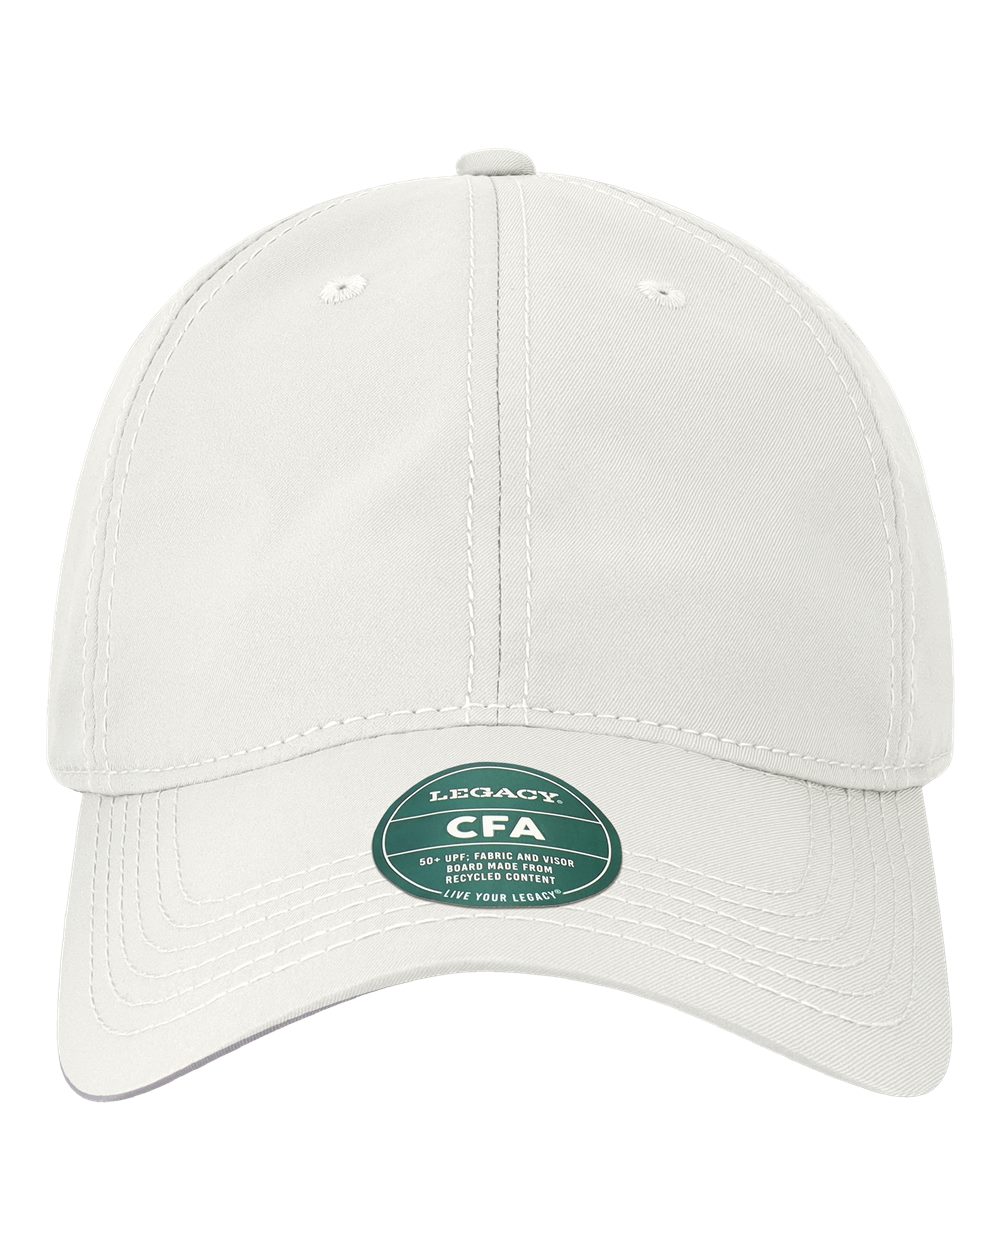 LEGACY CFA - Cool Fit Adjustable Cap